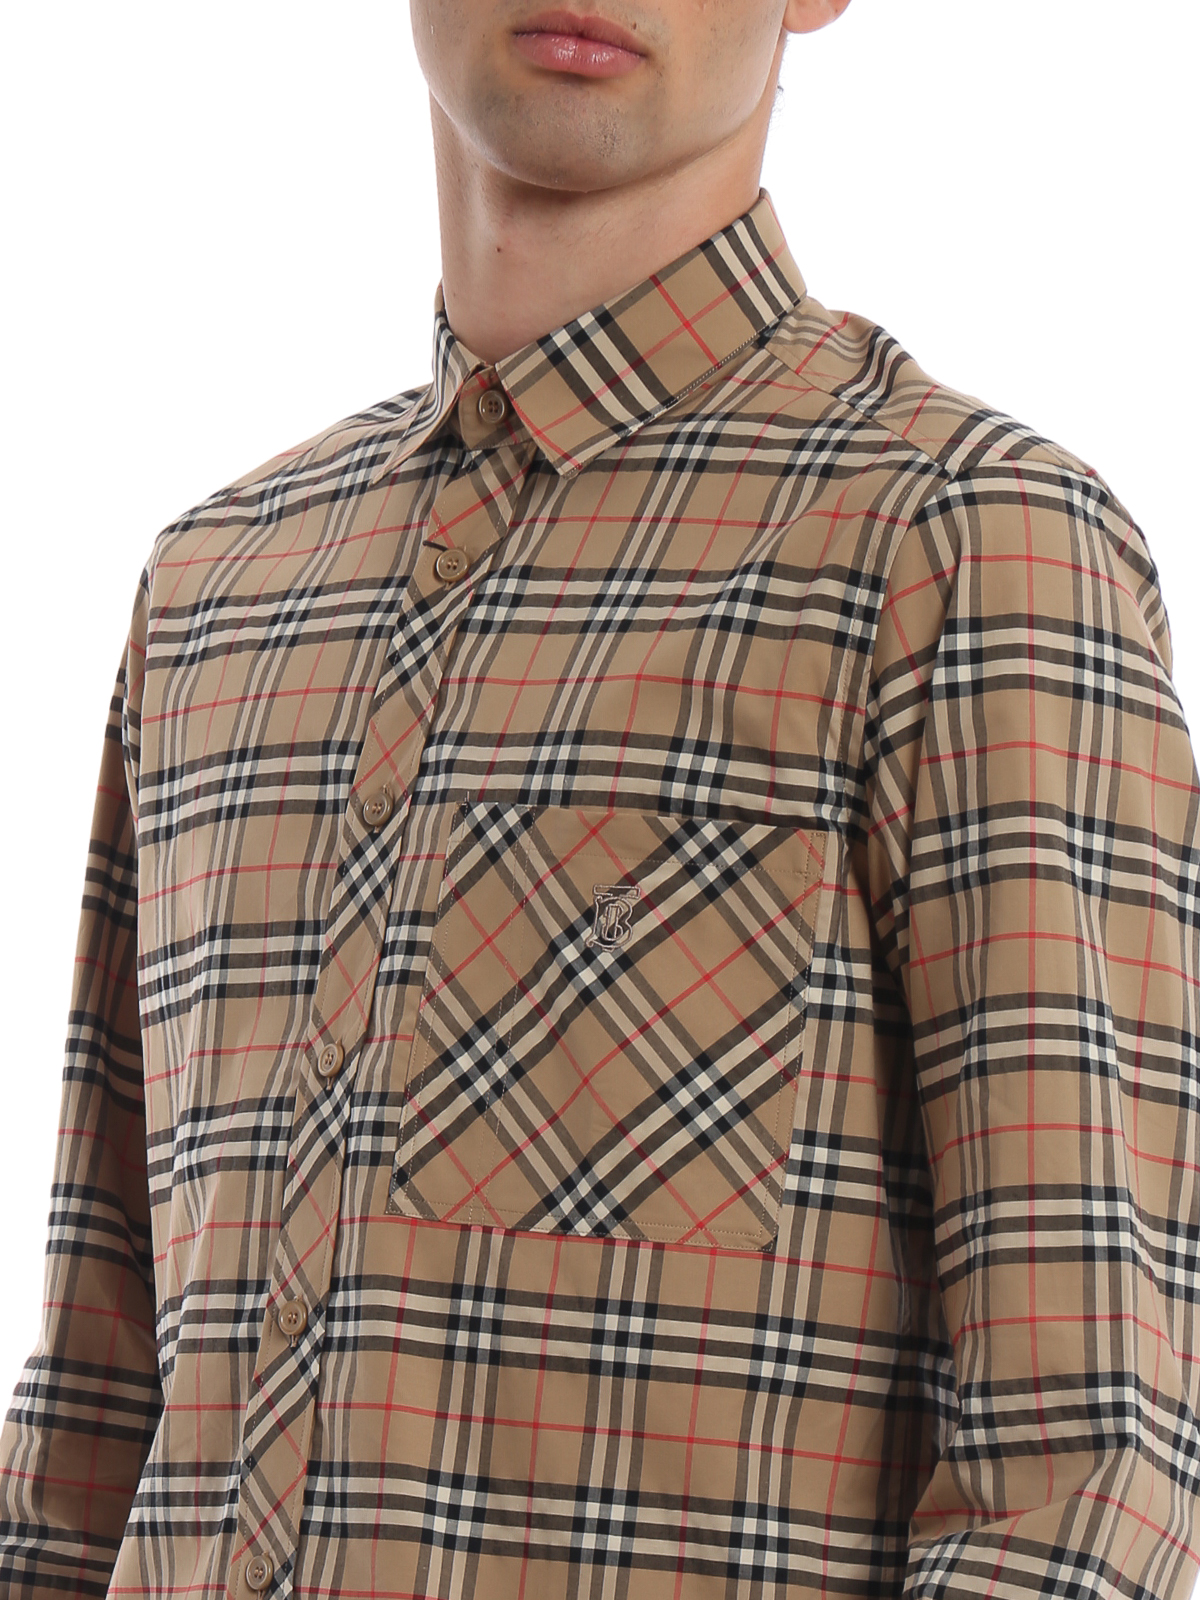 burberry cotton poplin shirt